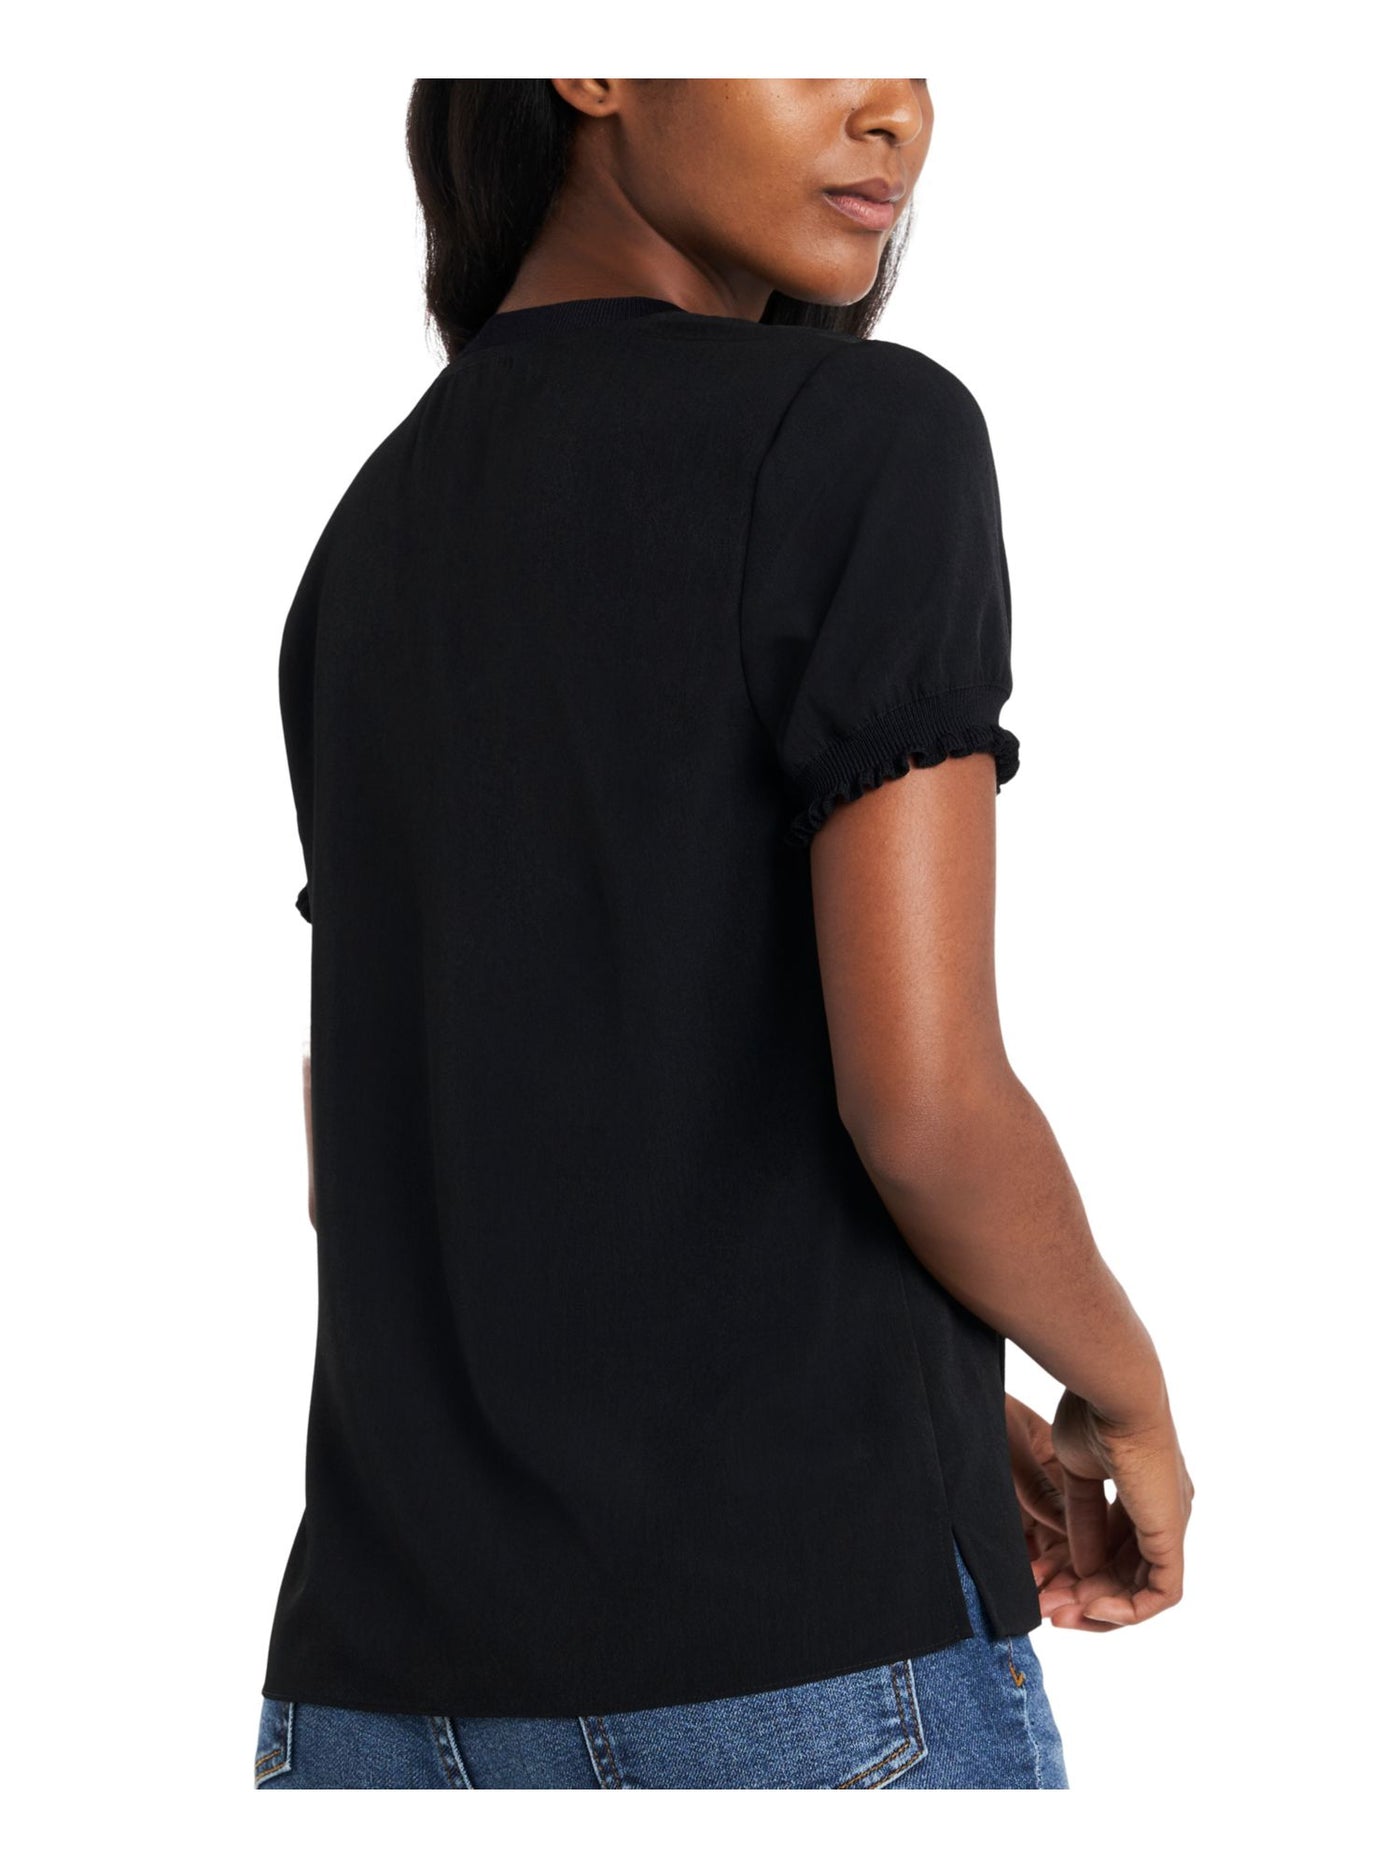 RILEY&RAE Womens Black Short Sleeve Crew Neck T-Shirt S